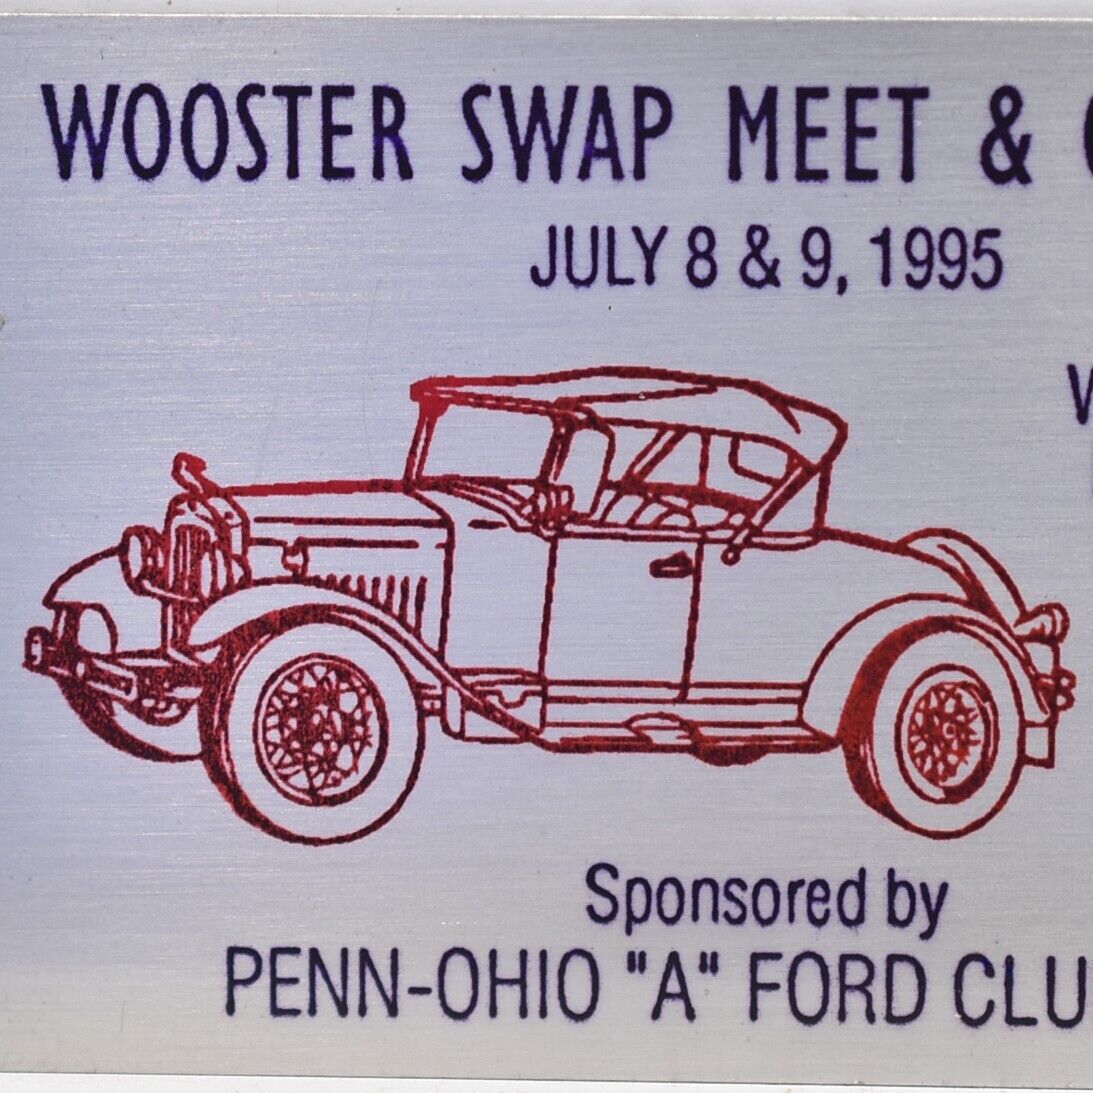 1995 Wayne County Fairgrounds Ford Model A Wooster Swap Car Show Penn-Ohio #2